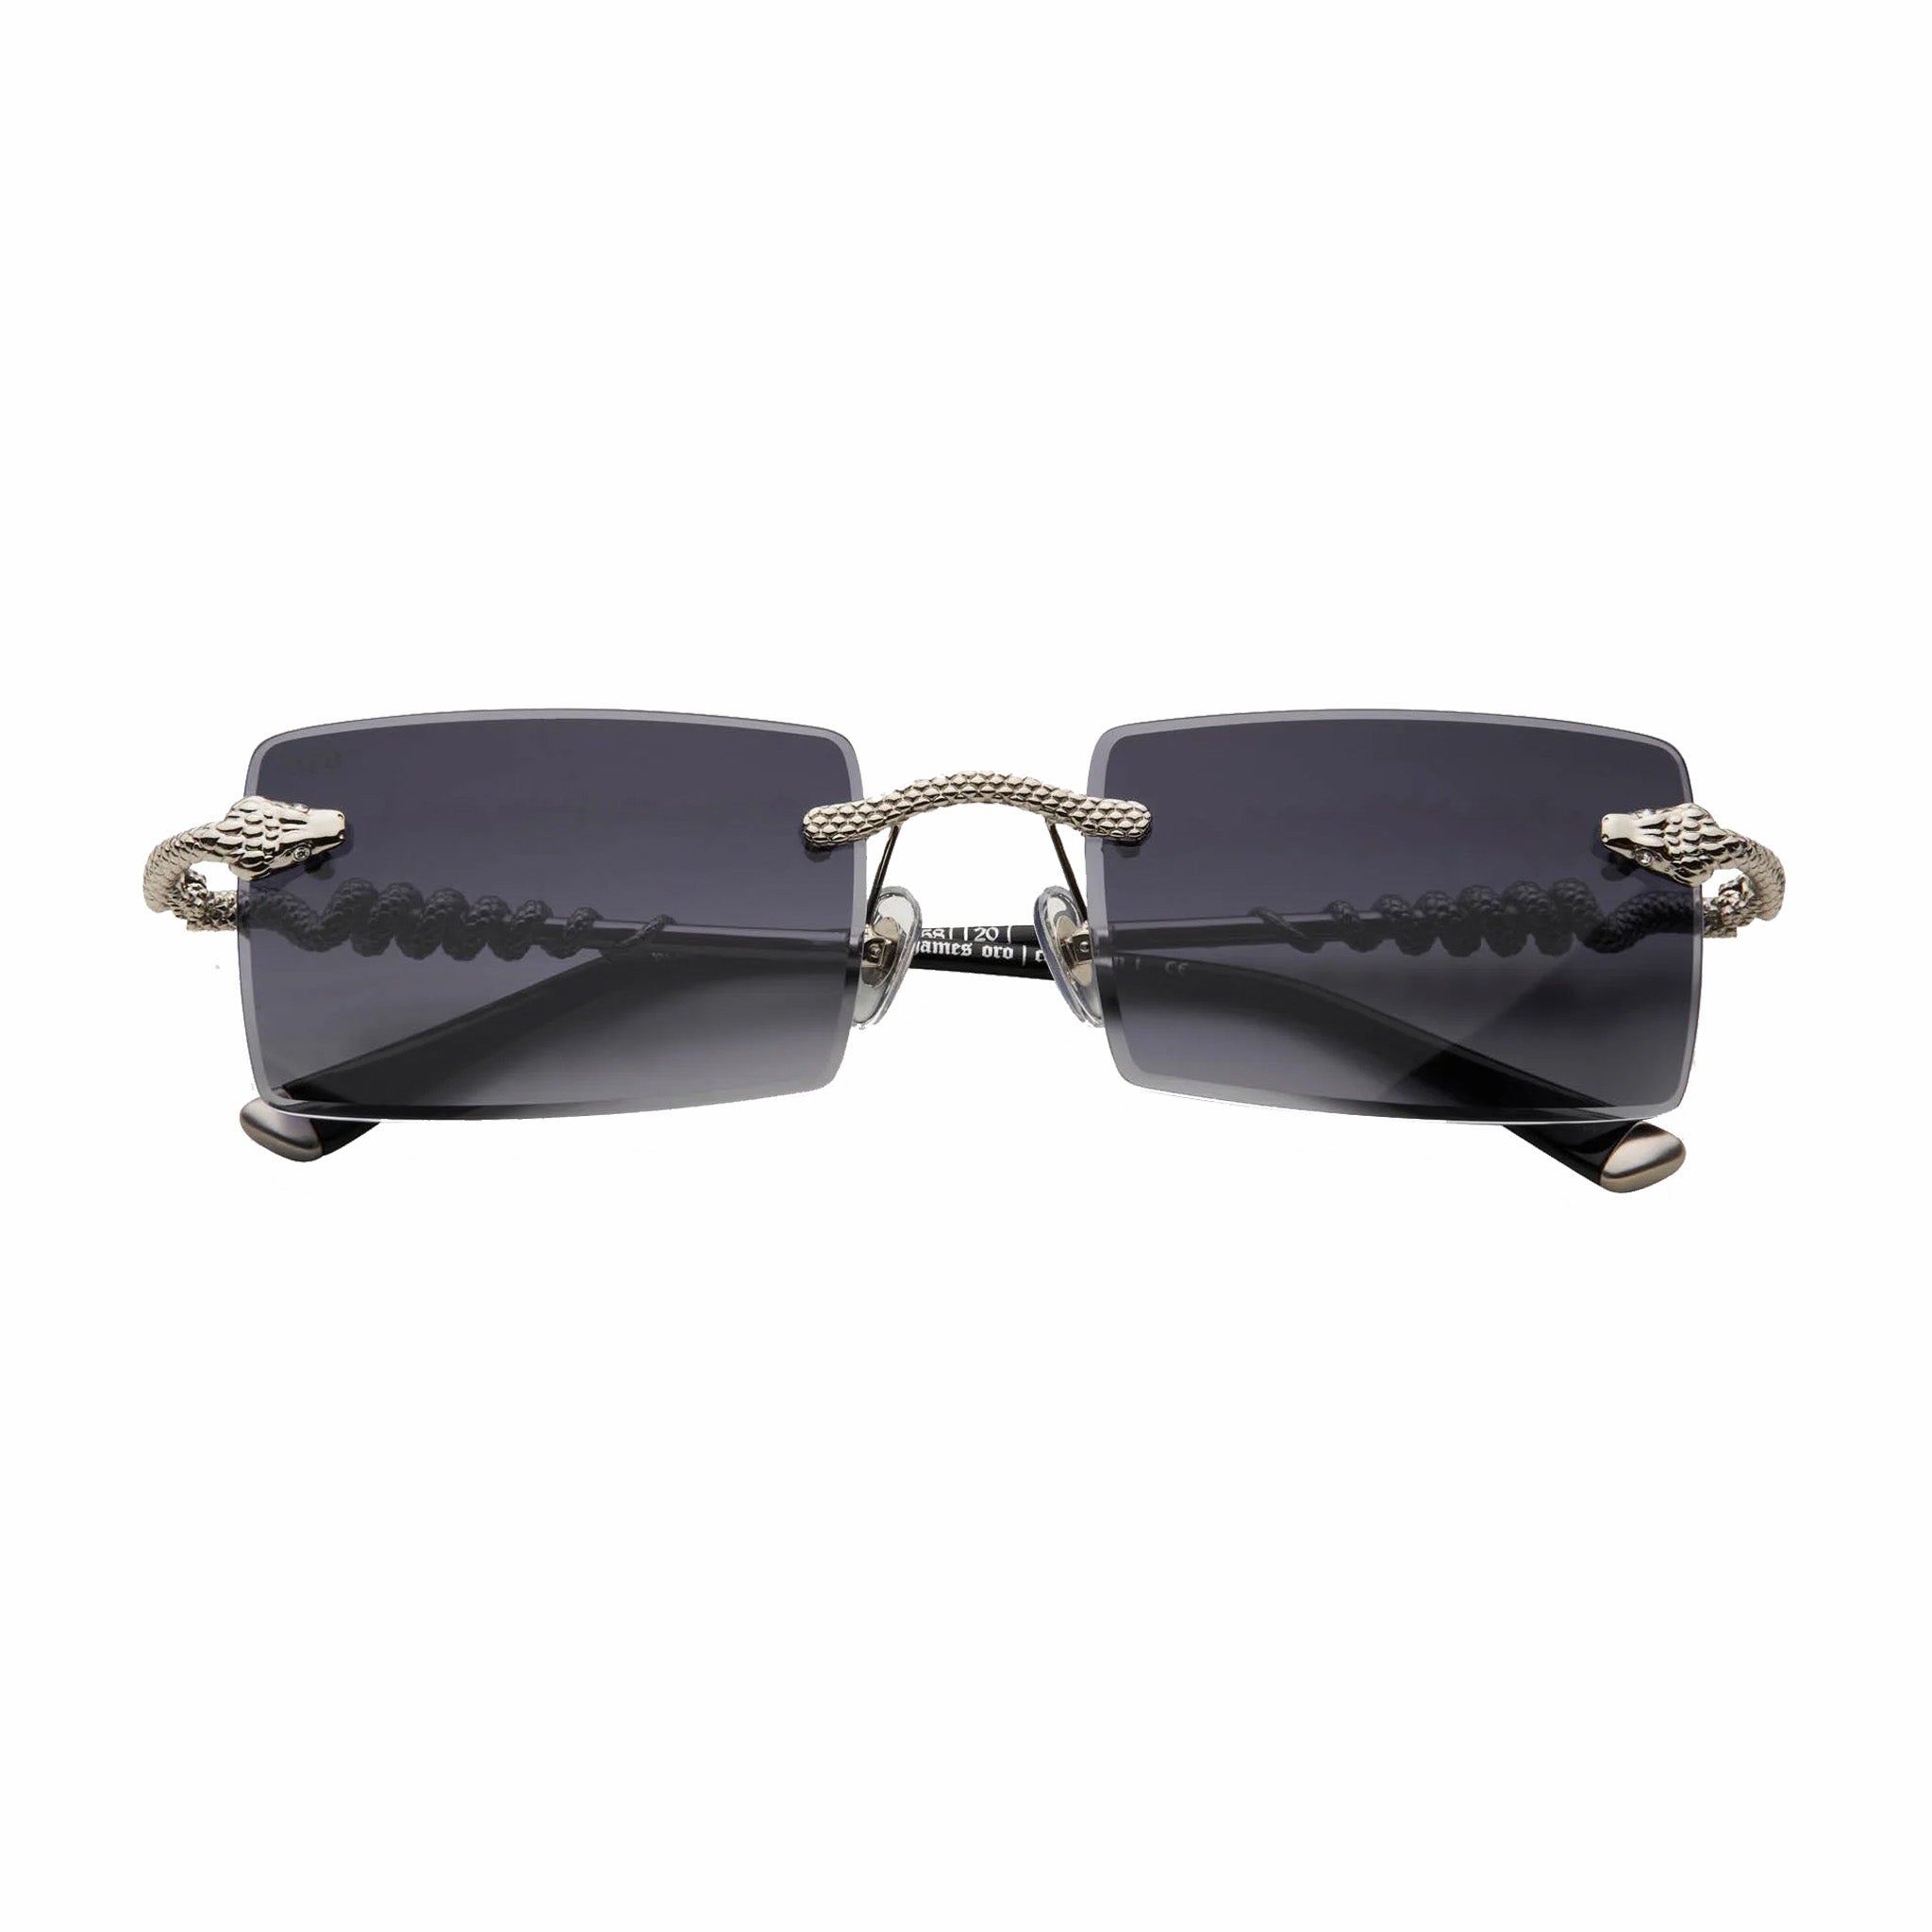 James Oro Black Tint Silver Serpent Authentic Sunglasses (Black) - August Shop